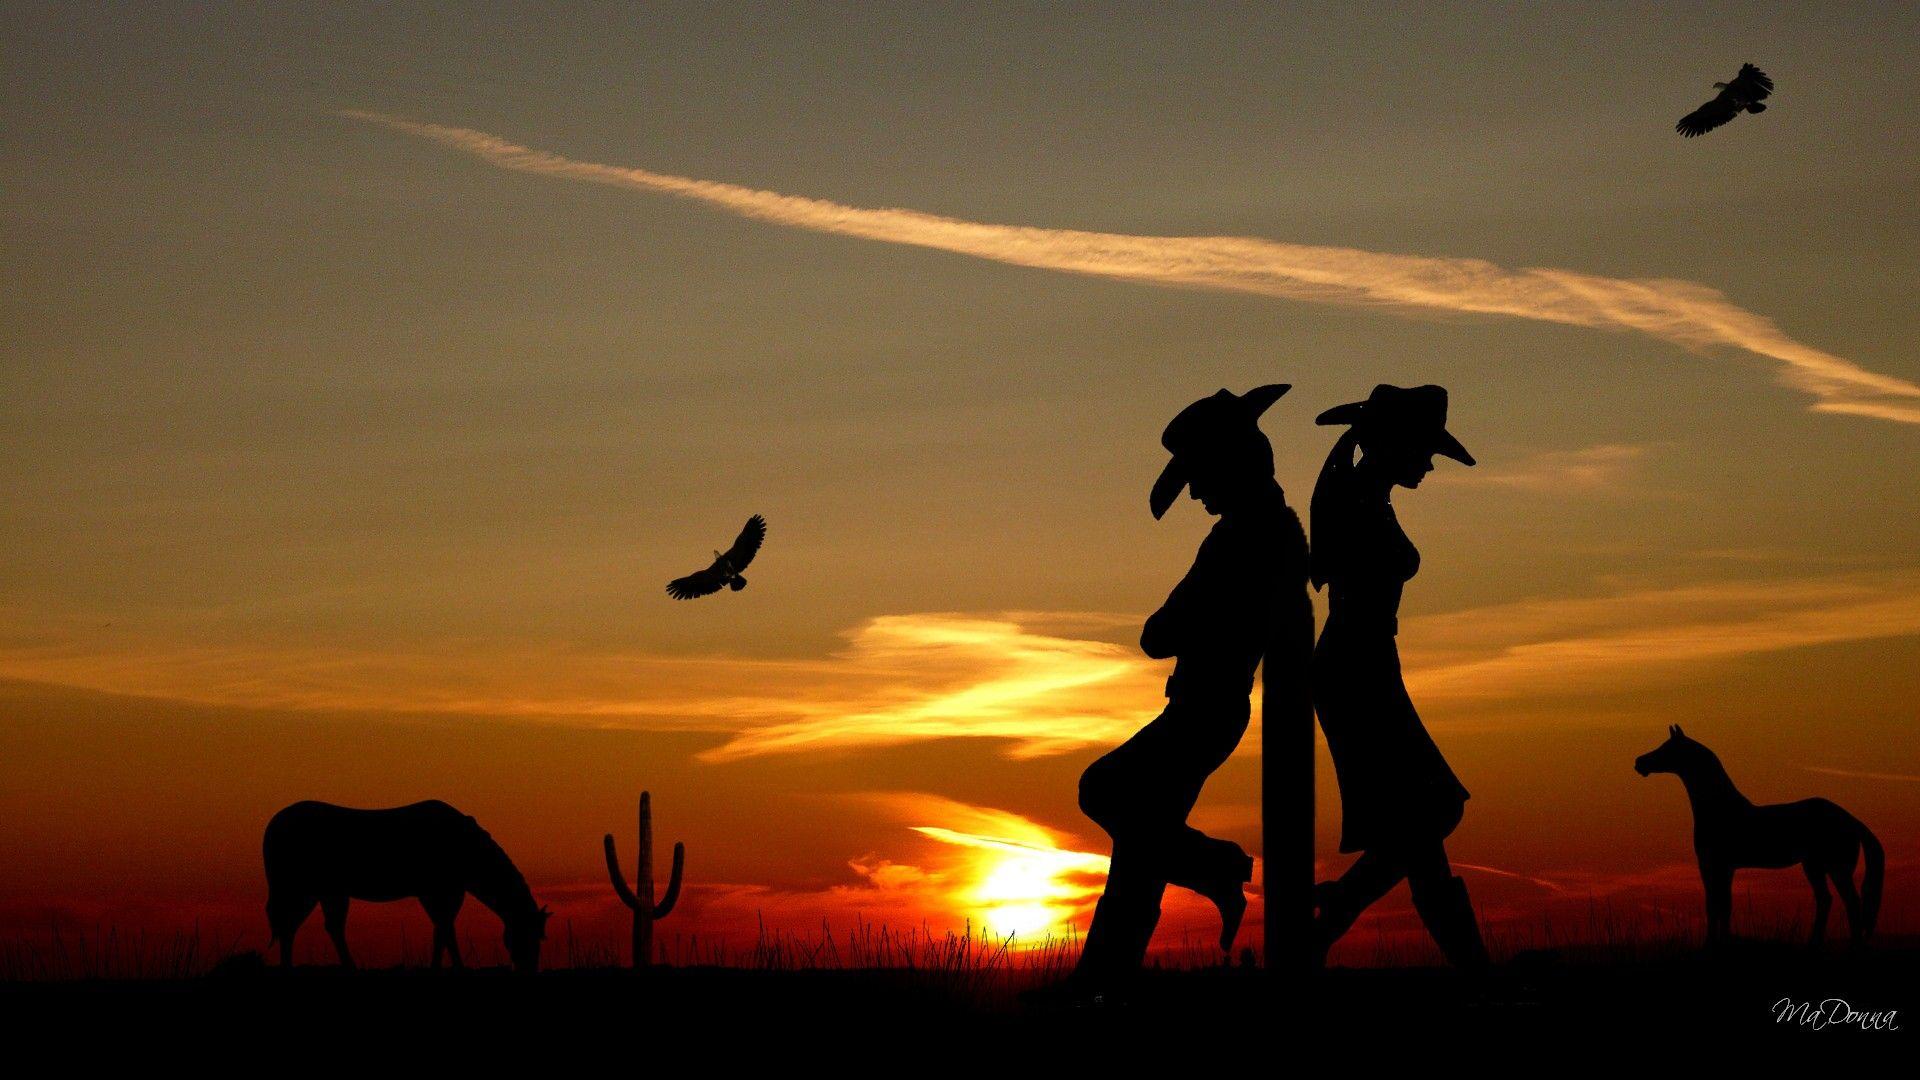 Western Cowboys. cactus cowboy Western Romance wallpaper. Cards